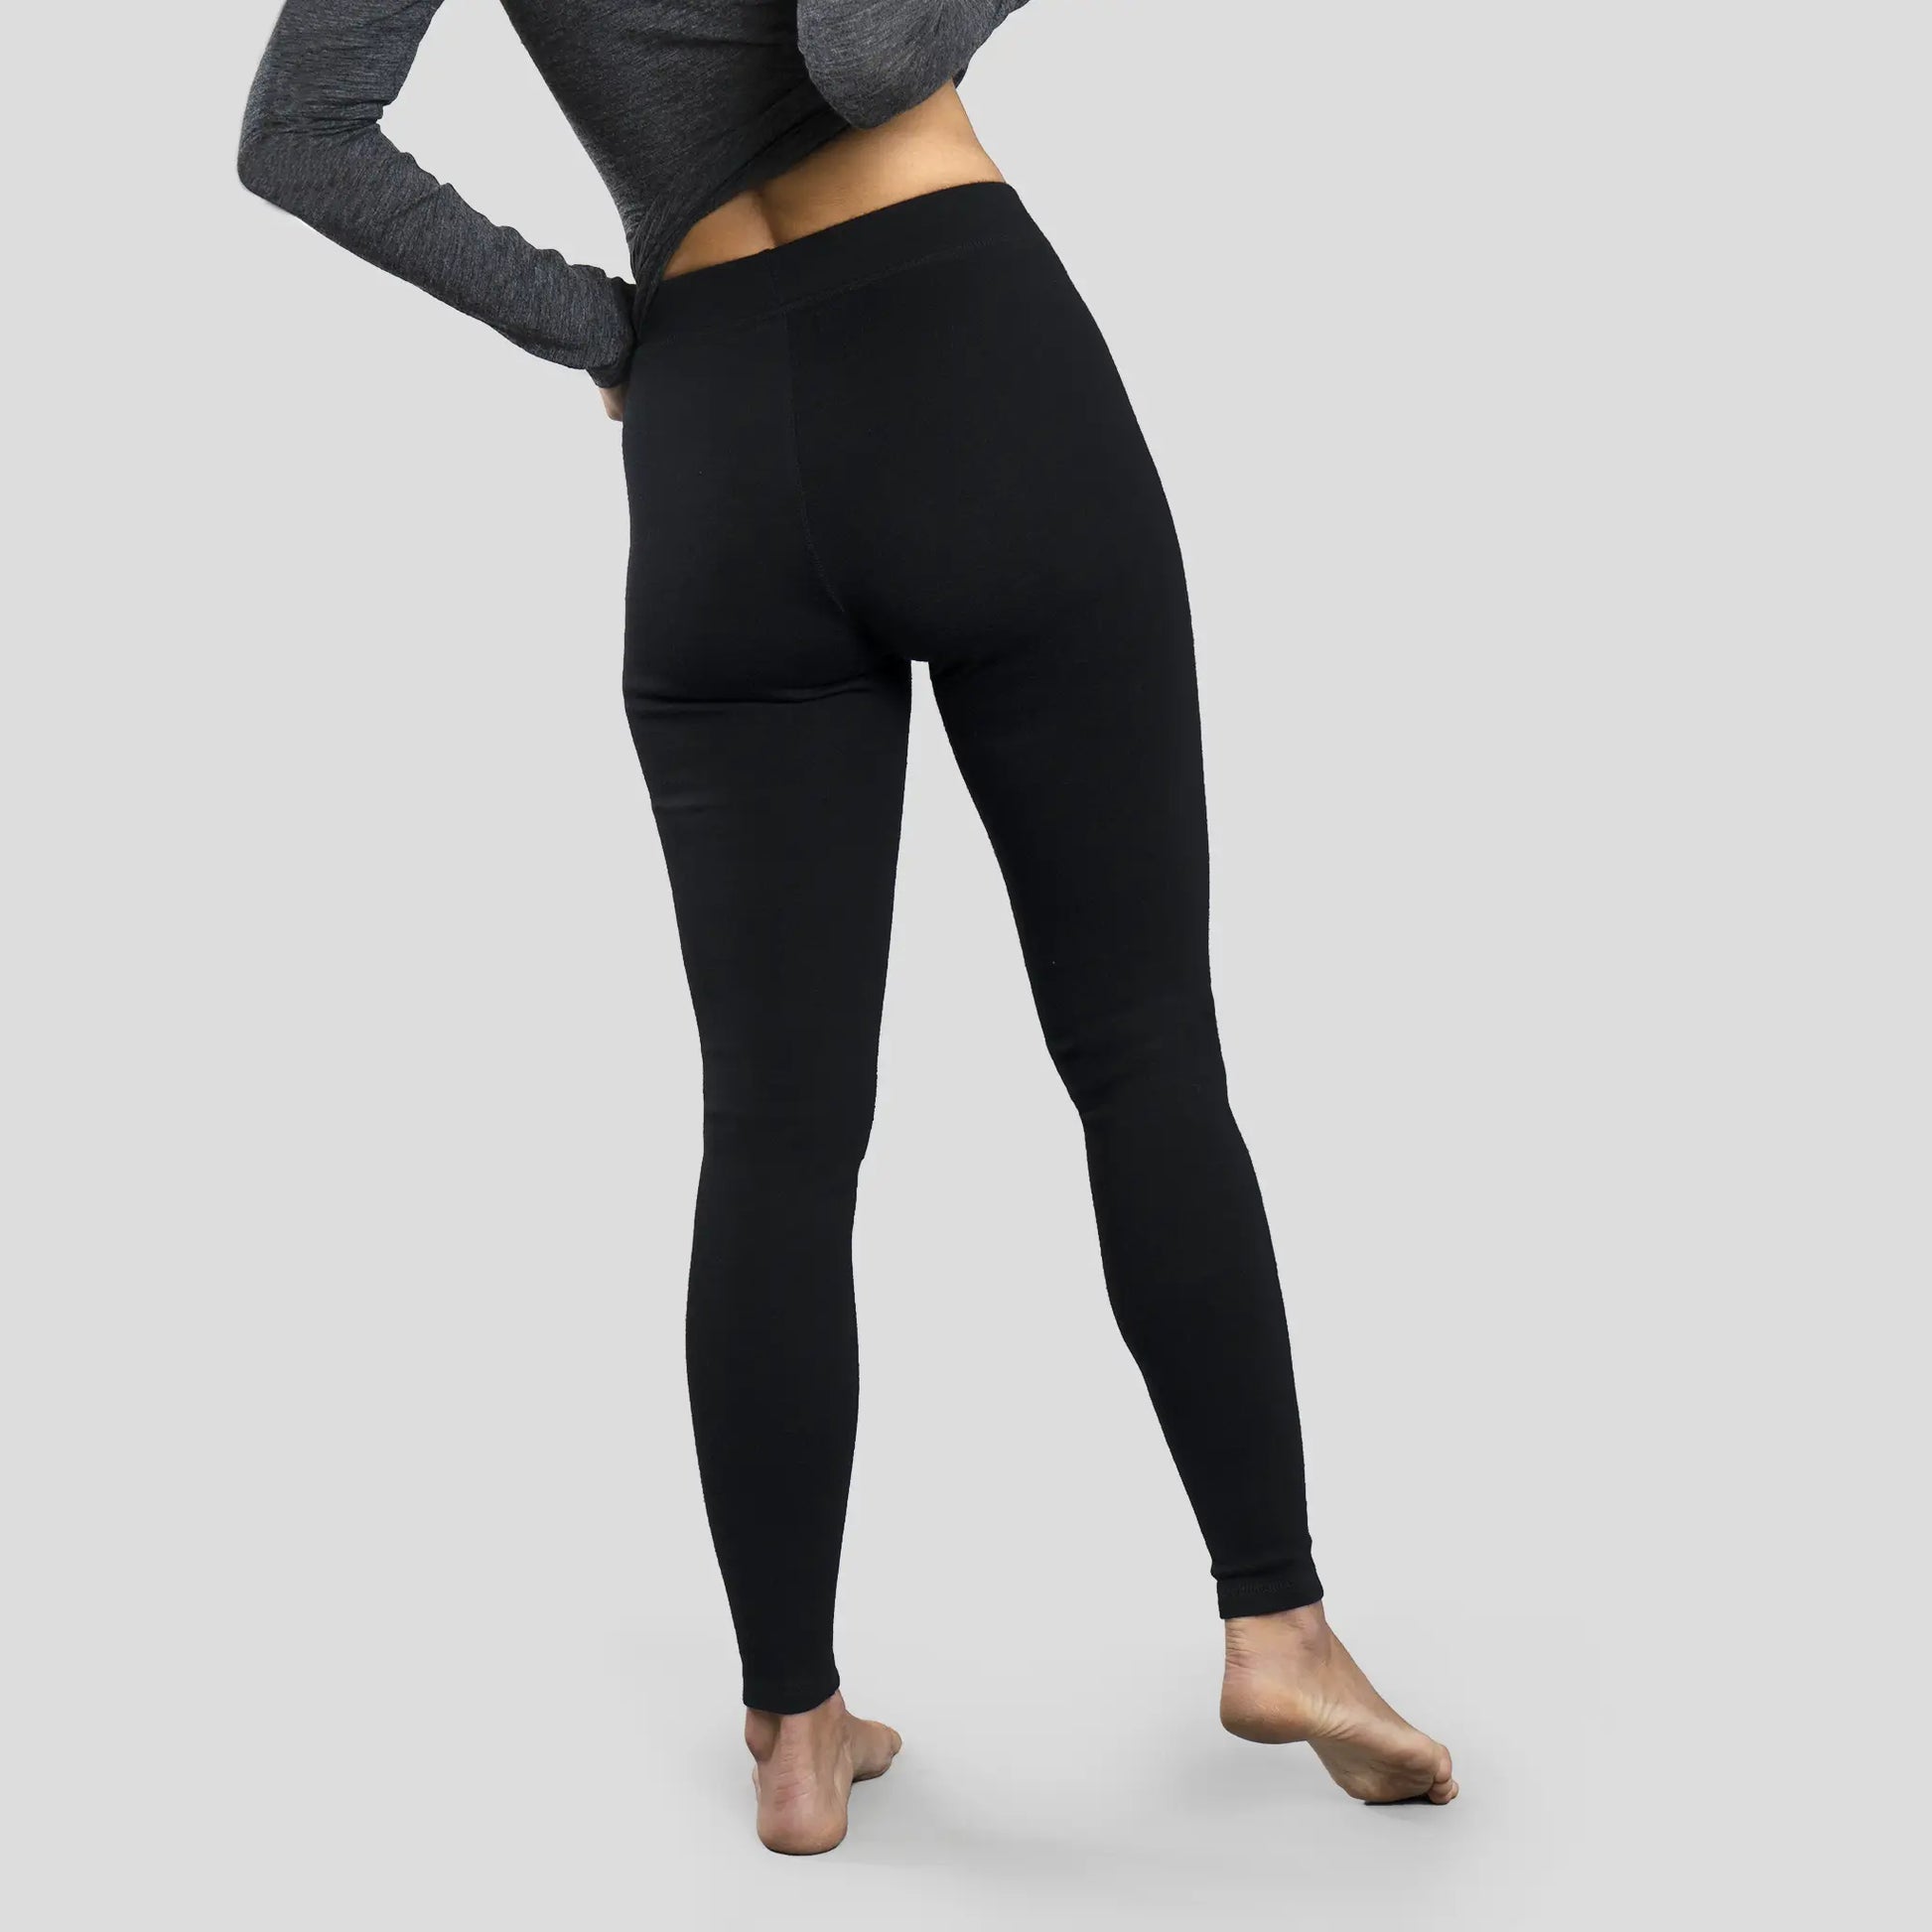 womens best active leggings lightweight color black